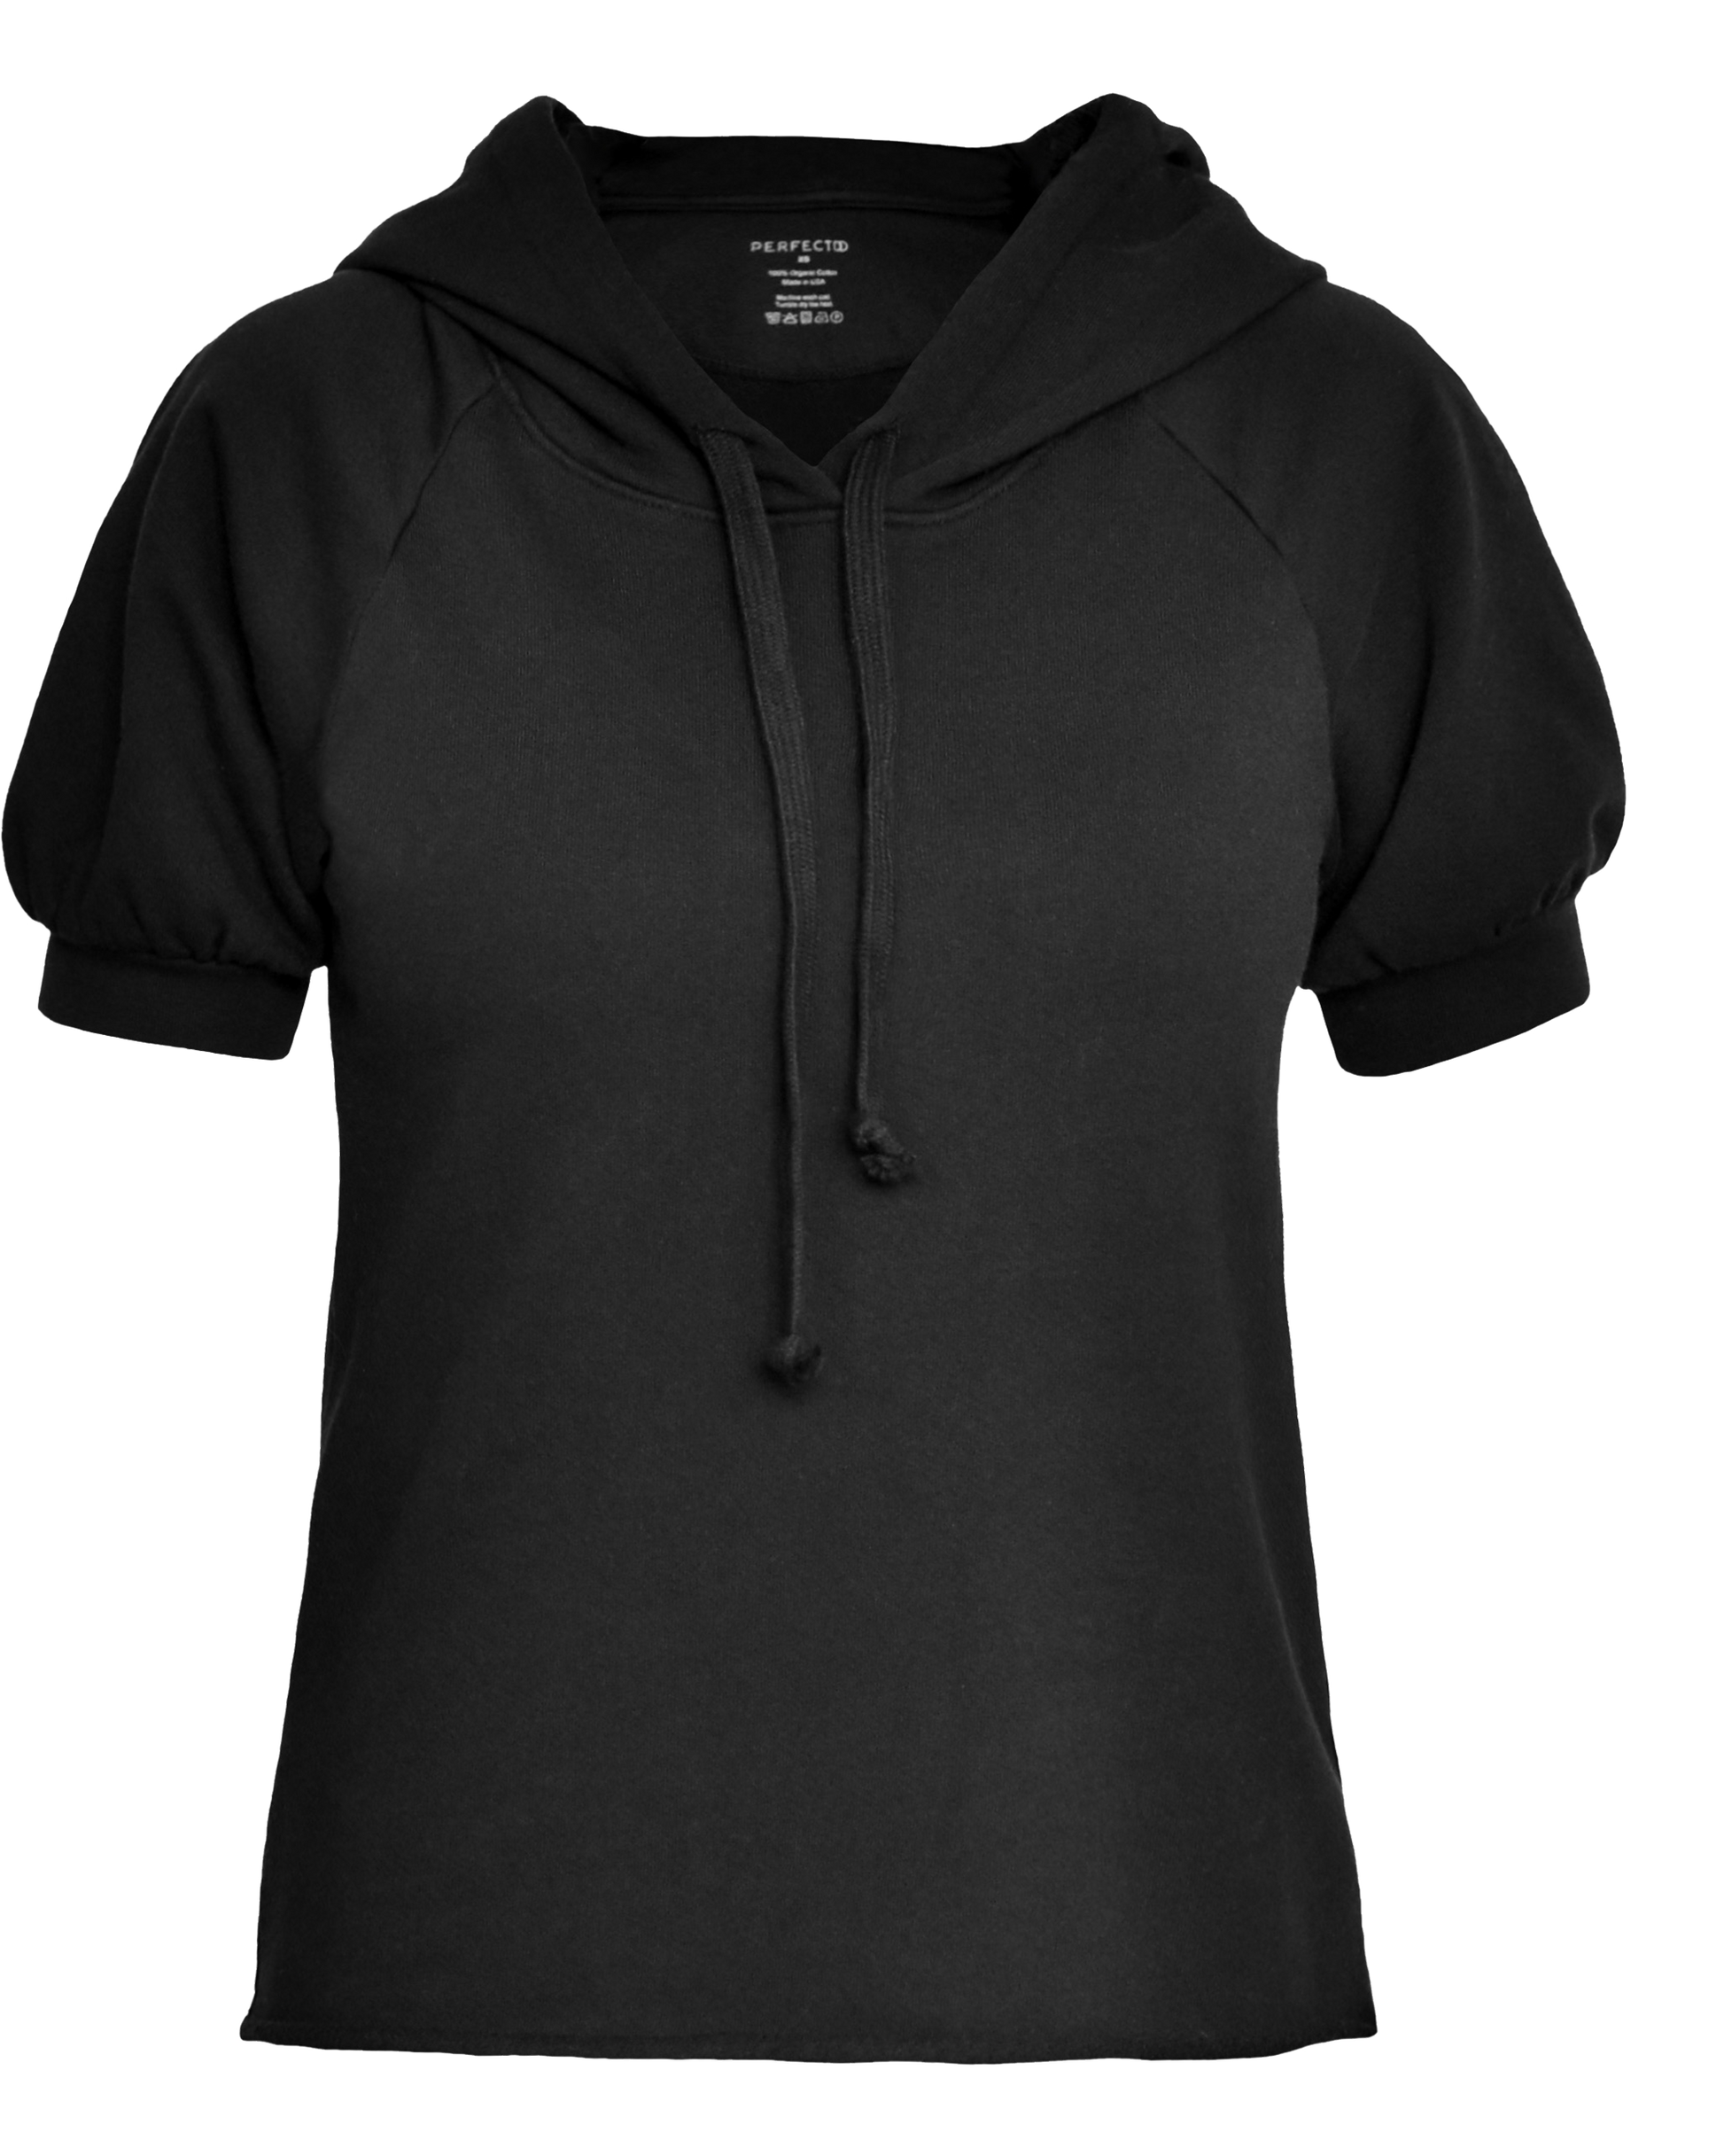 Flat lay of black cotton short sleeve sweatshirt